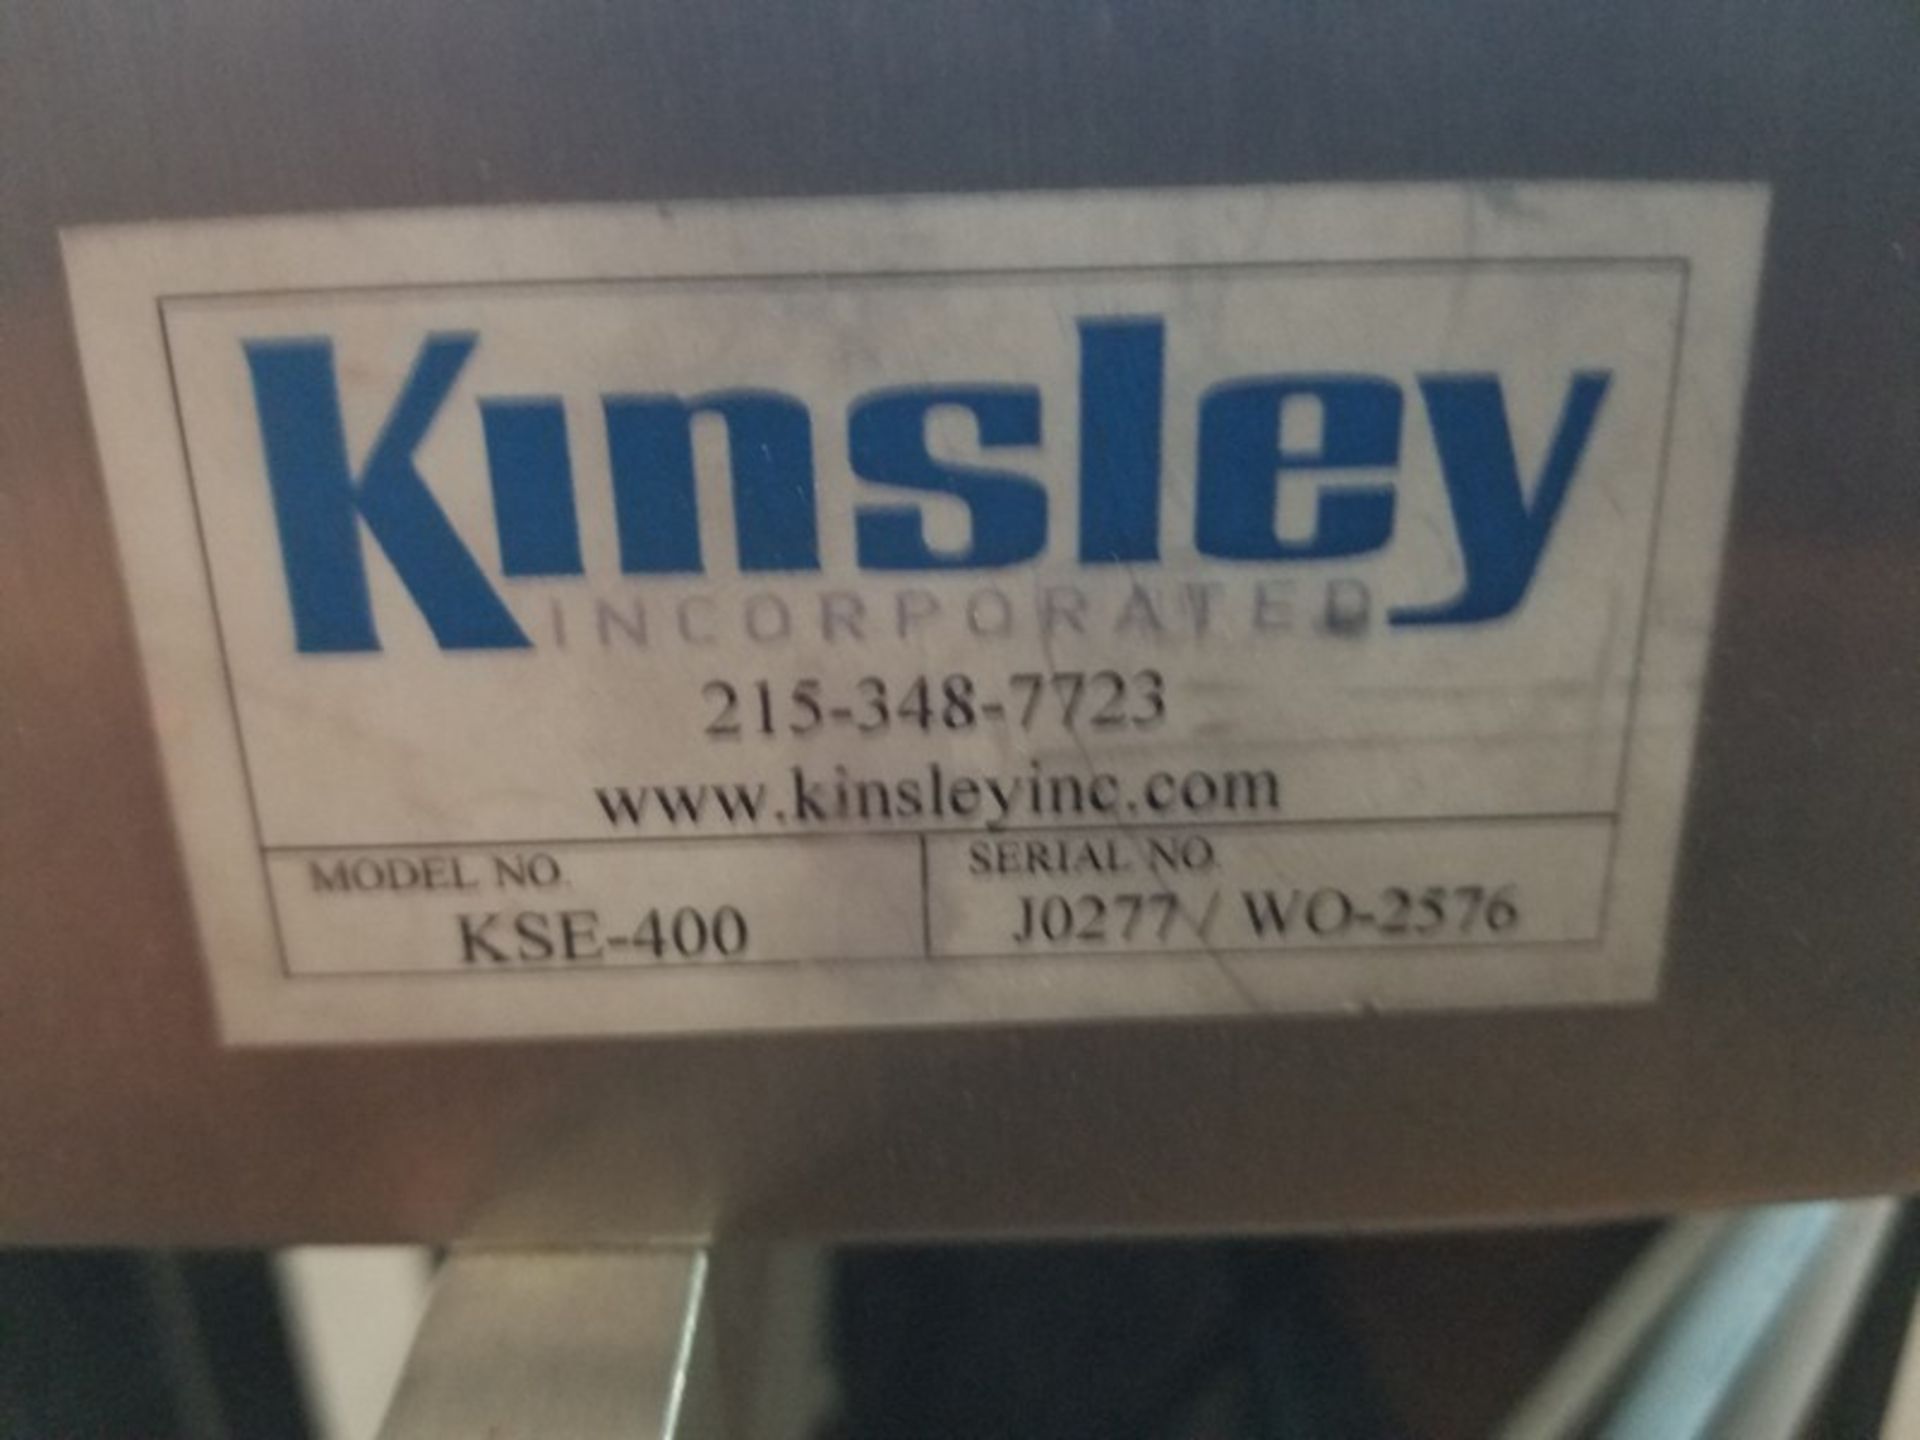 Kinsley KSE-400 Bottle Turner, S/N JO277/WO-2576, Volt 120 (Loading Fee $100)(Located Fort Worth, - Image 9 of 9